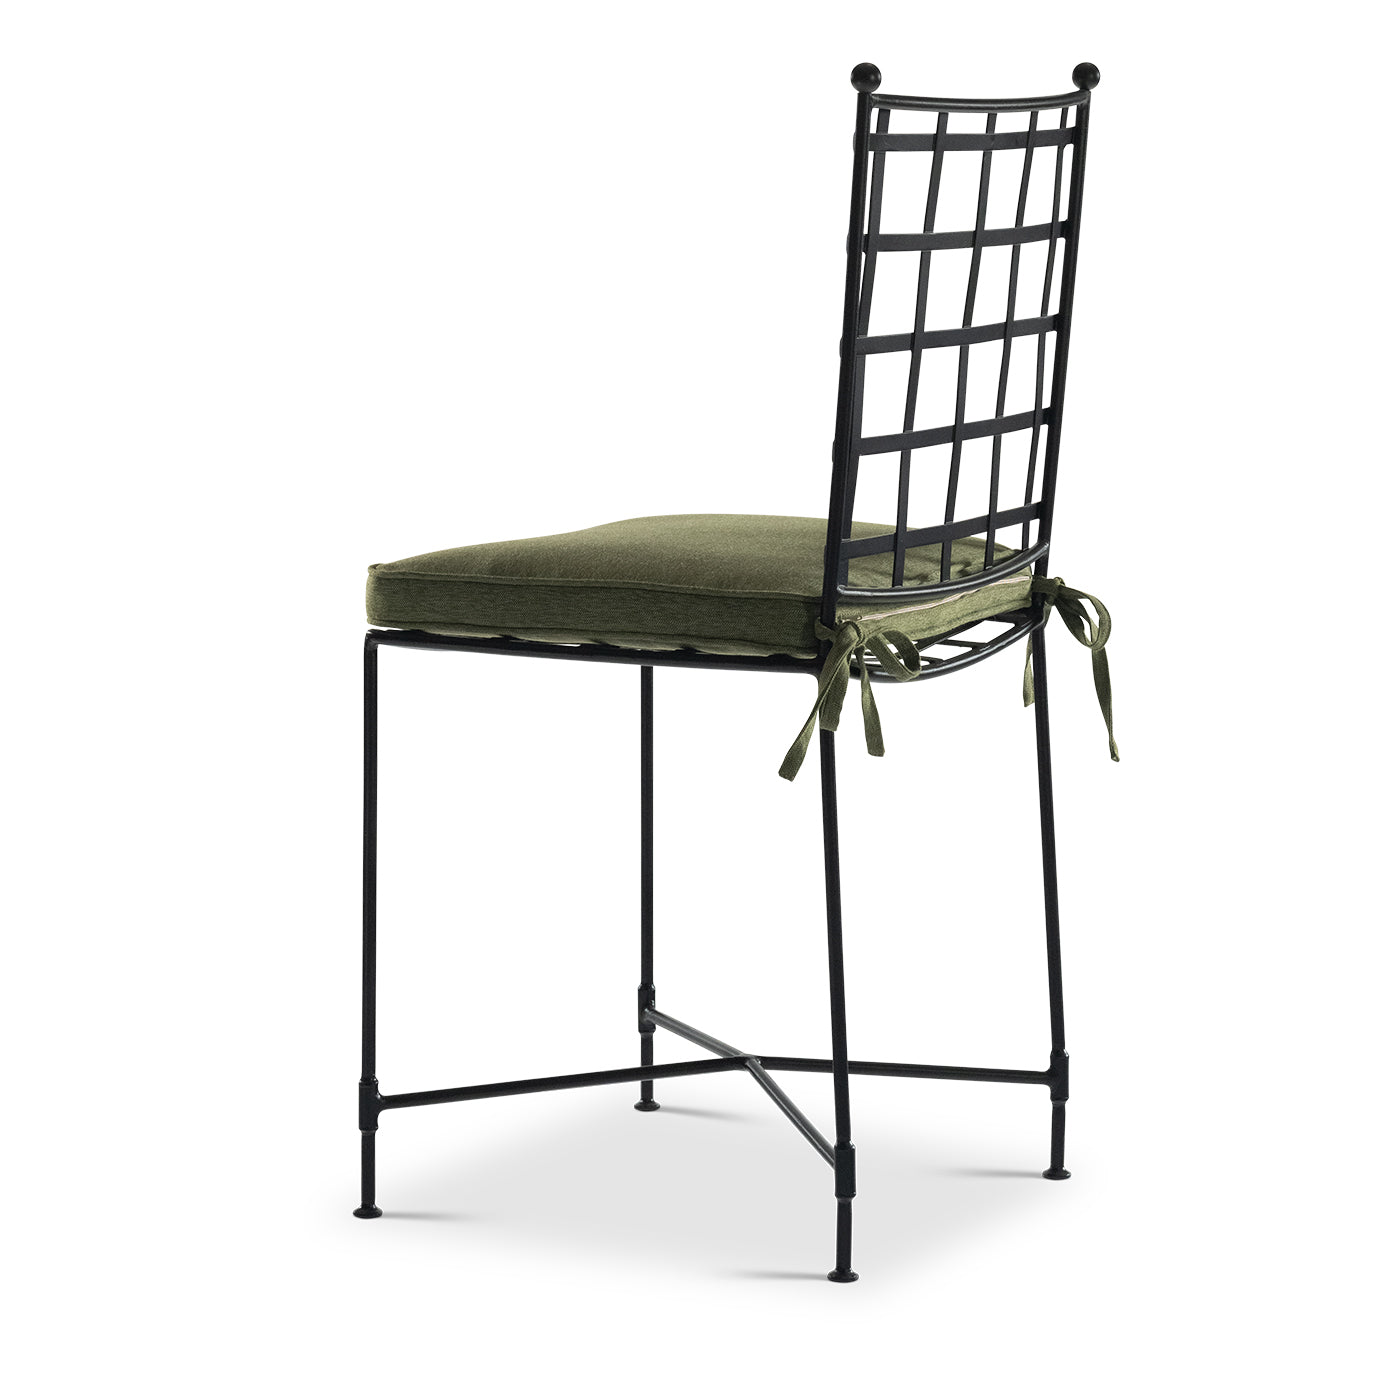 La clásica silla de jardín verde - Vista alternativa 2